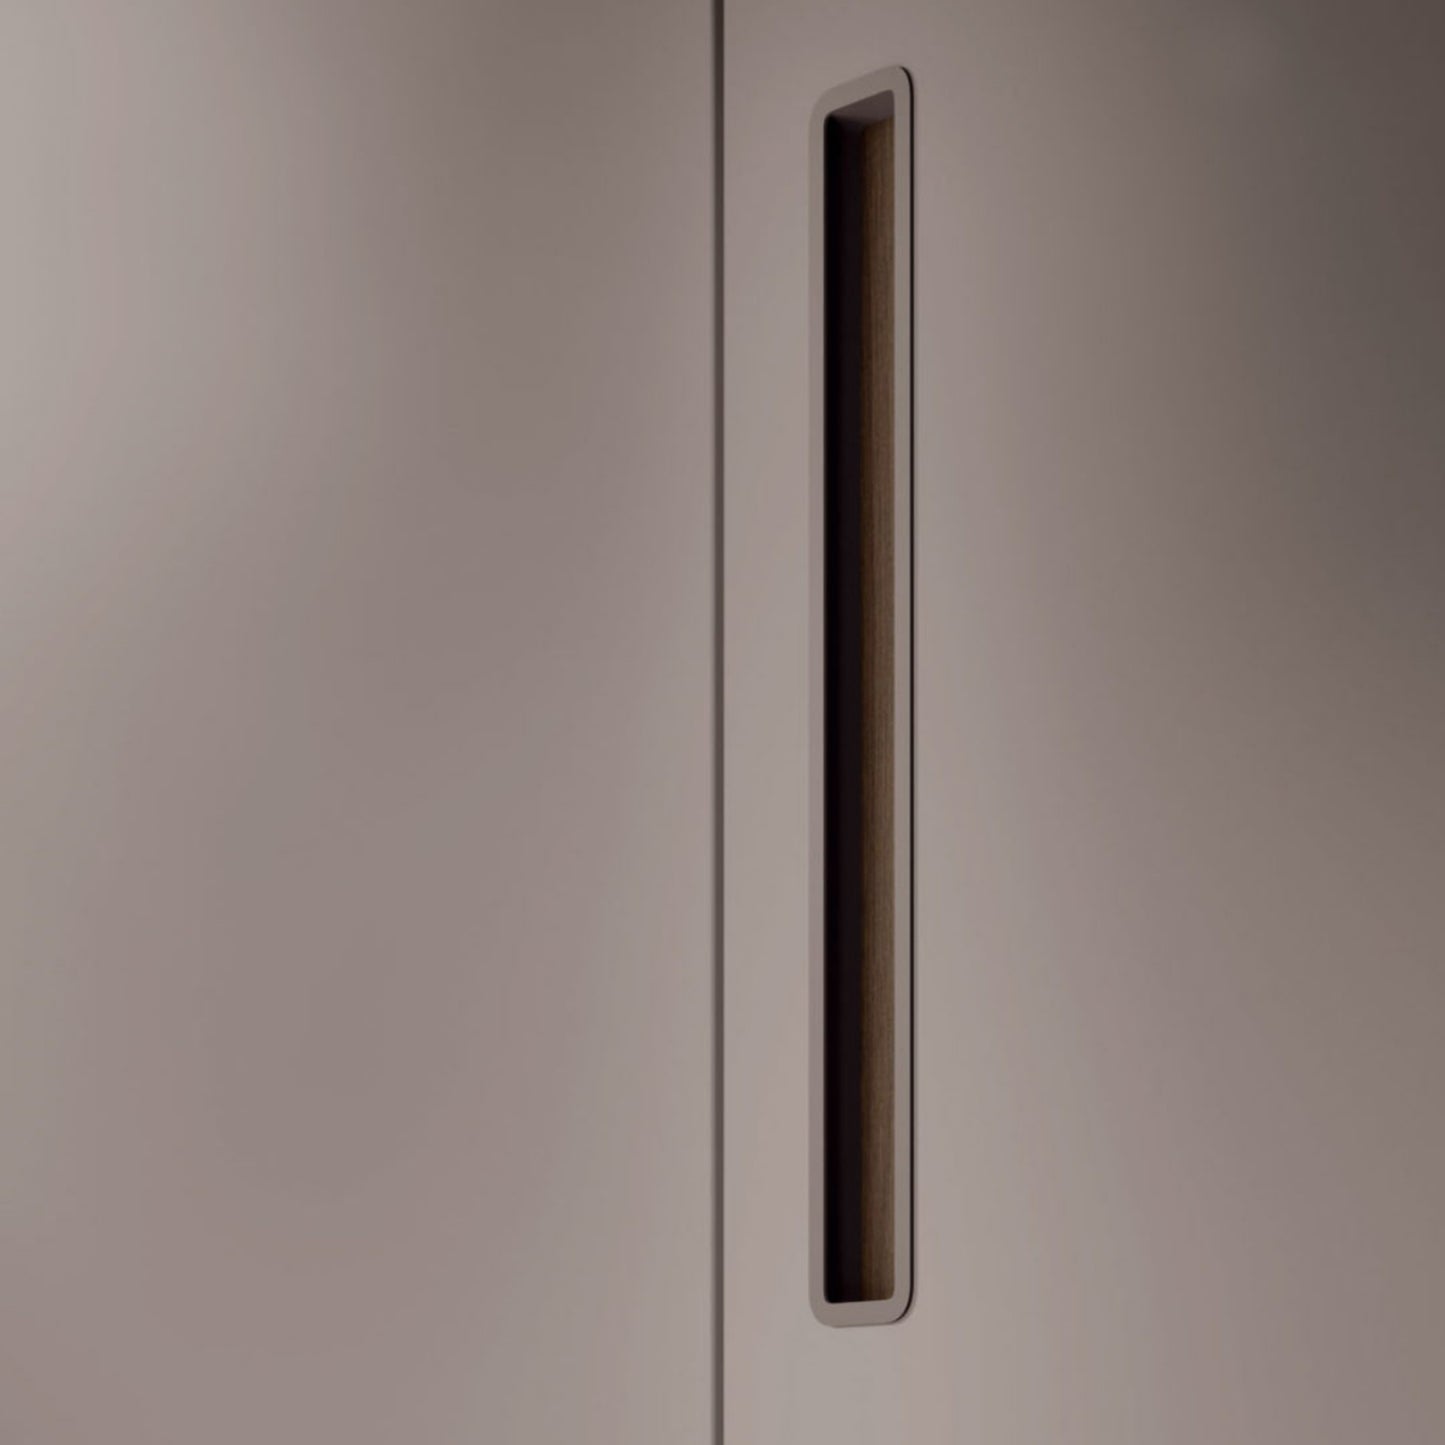 Split Hinged Door by Orme Design